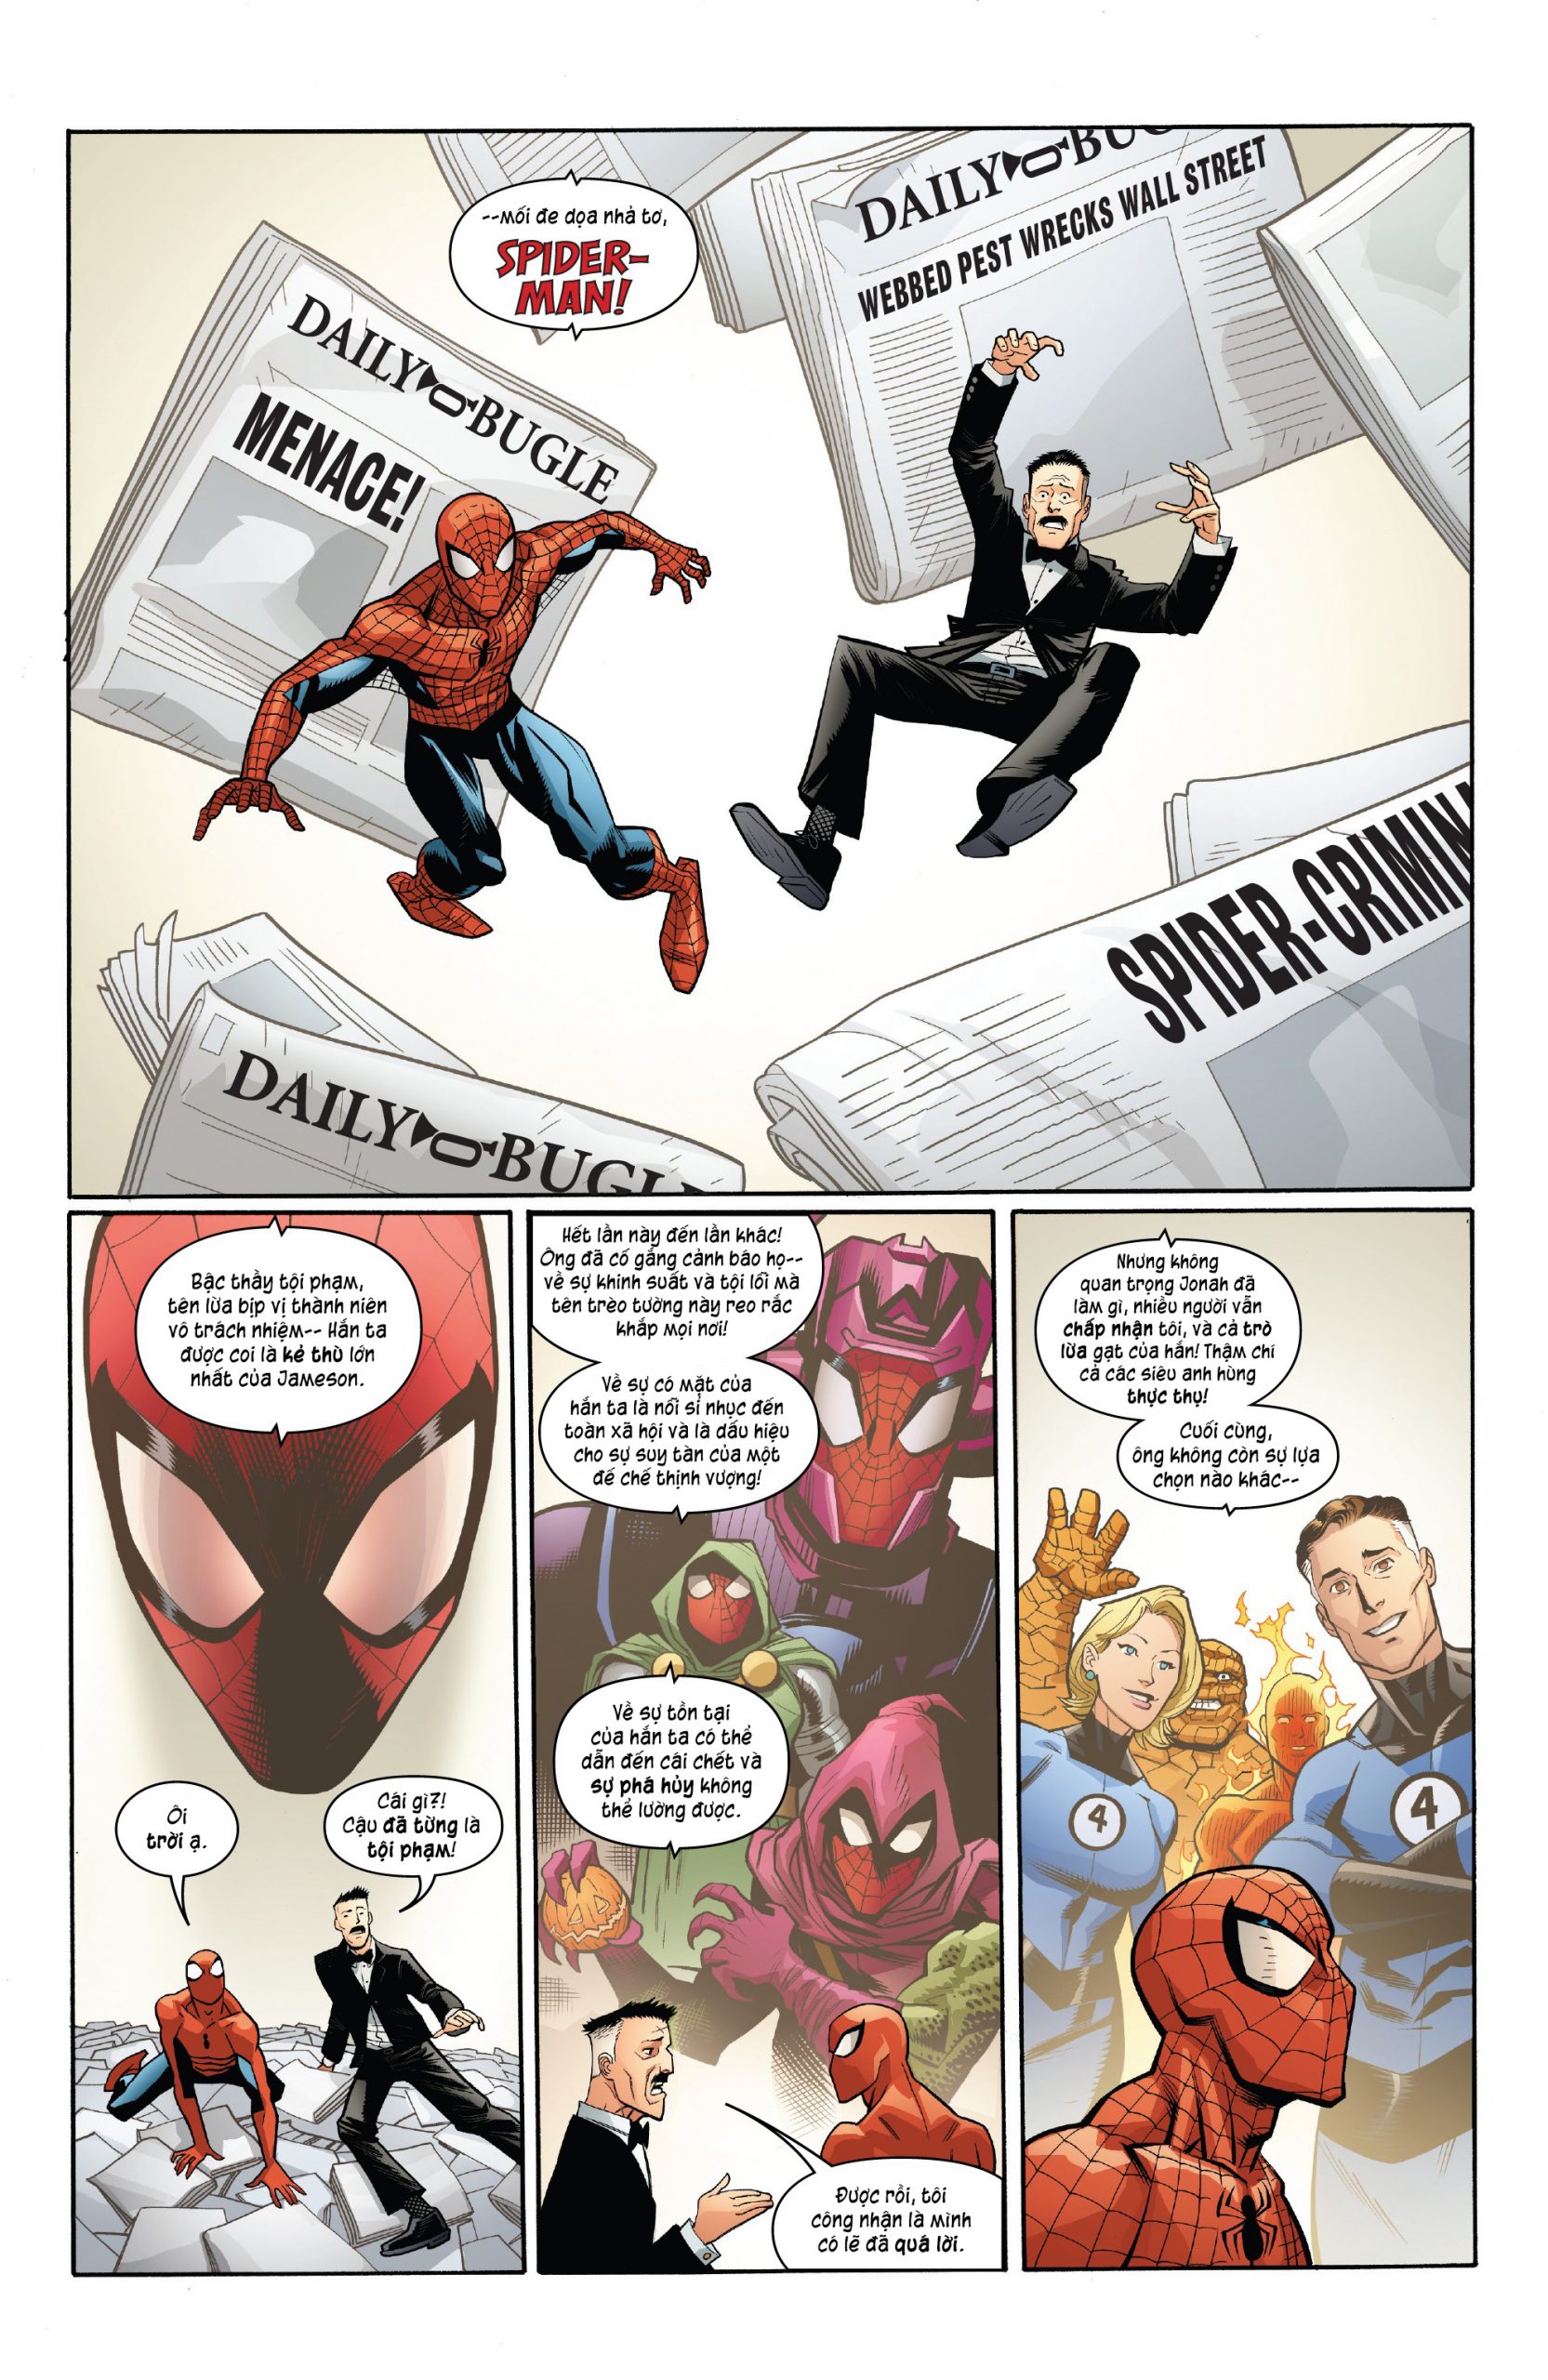 https://langgeek.net/wp-content/uploads/2021/11/Amazing-Spider-Man-012-012-scaled.jpg